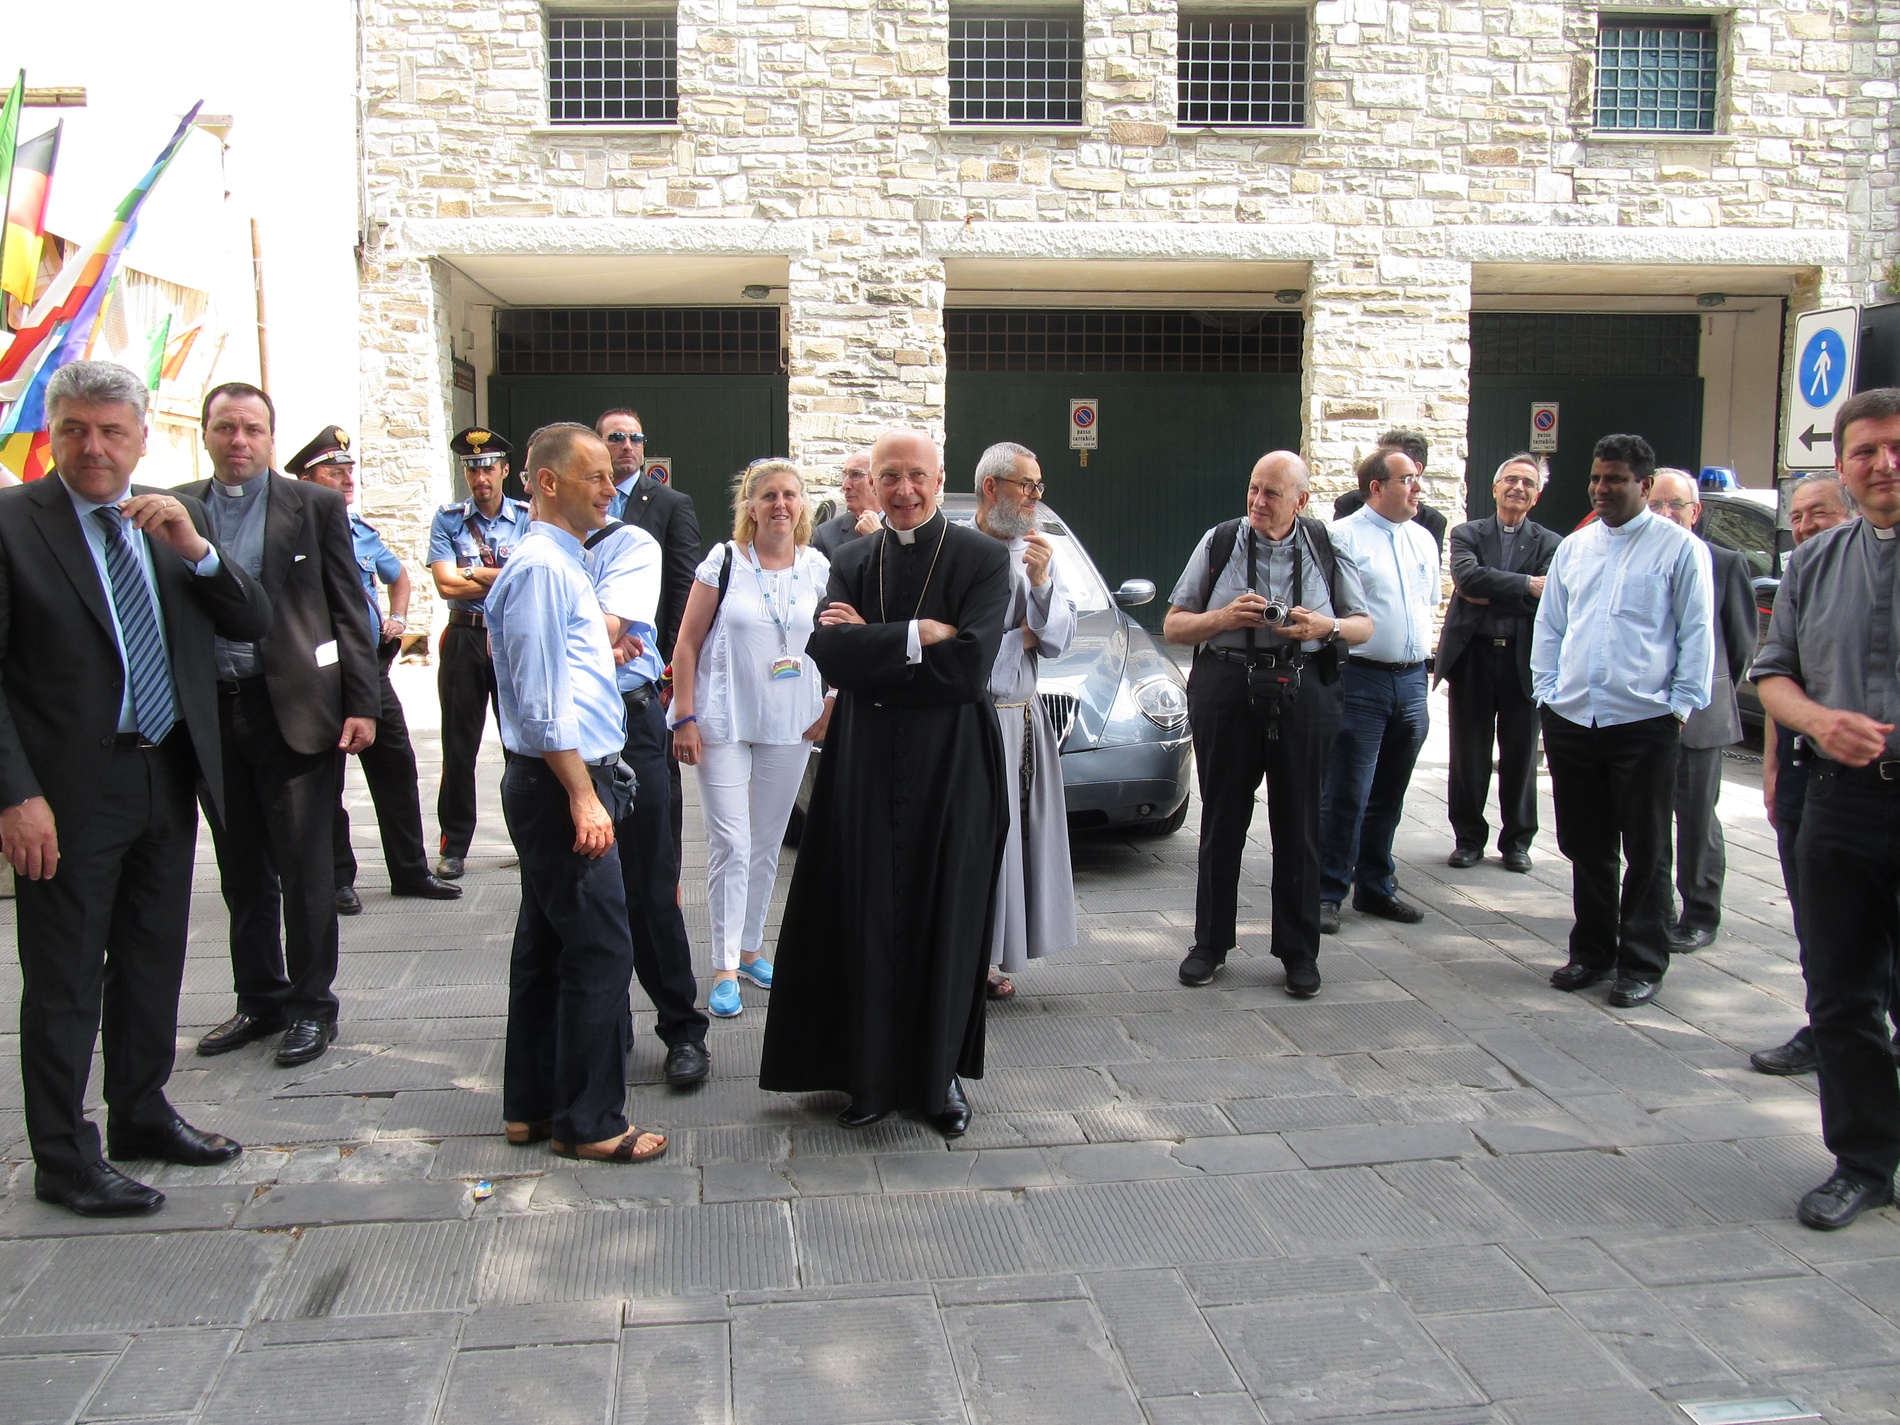 gita-clero-portovenere-lunigiana-2015-06-08-10-54-27